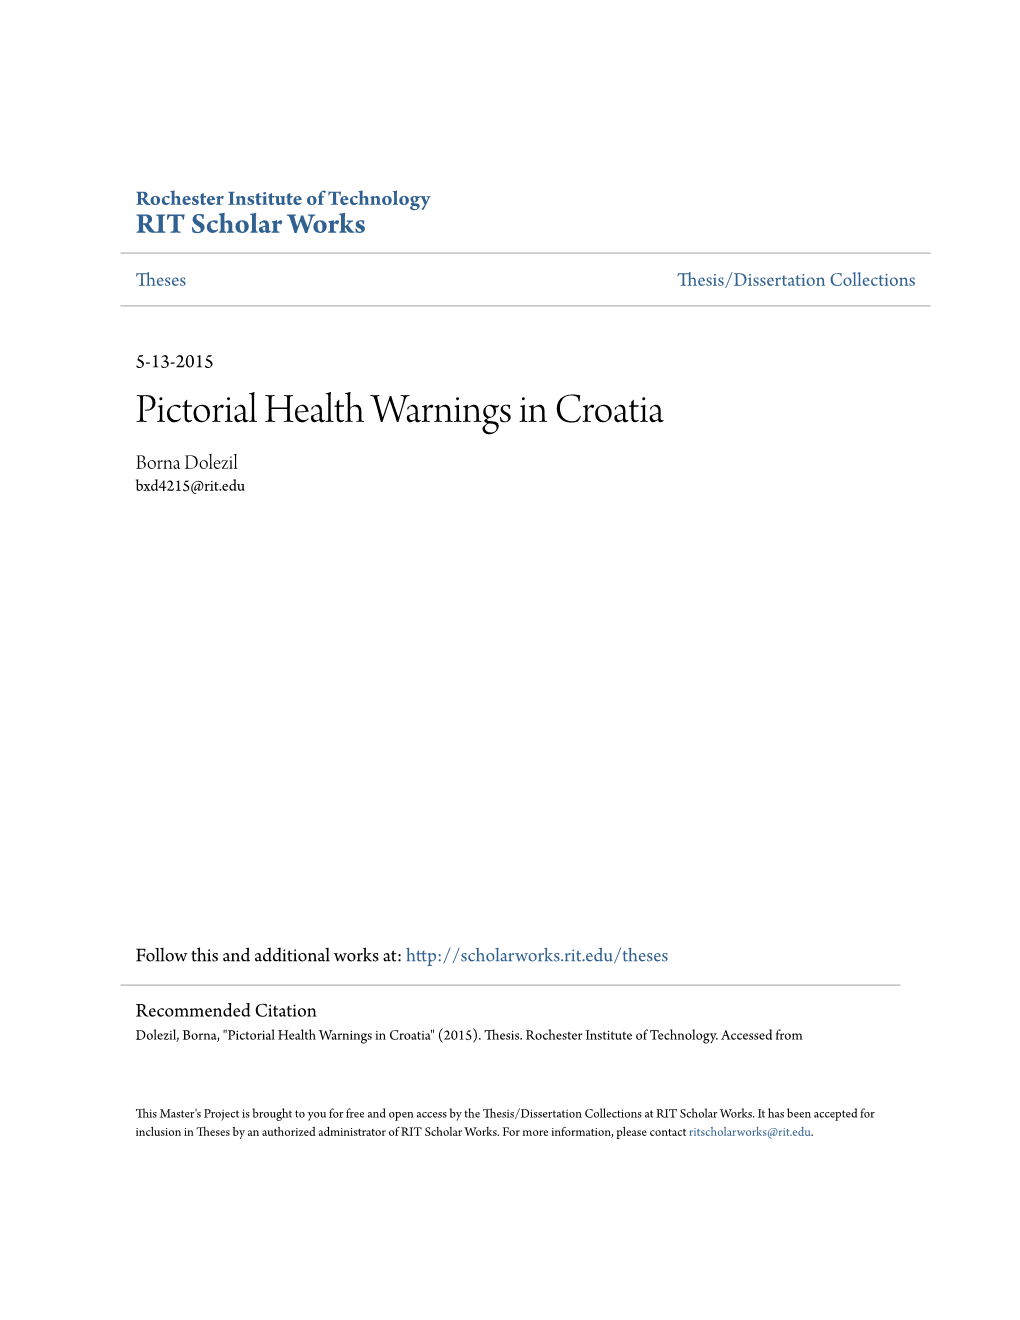 Pictorial Health Warnings in Croatia Borna Dolezil Bxd4215@Rit.Edu